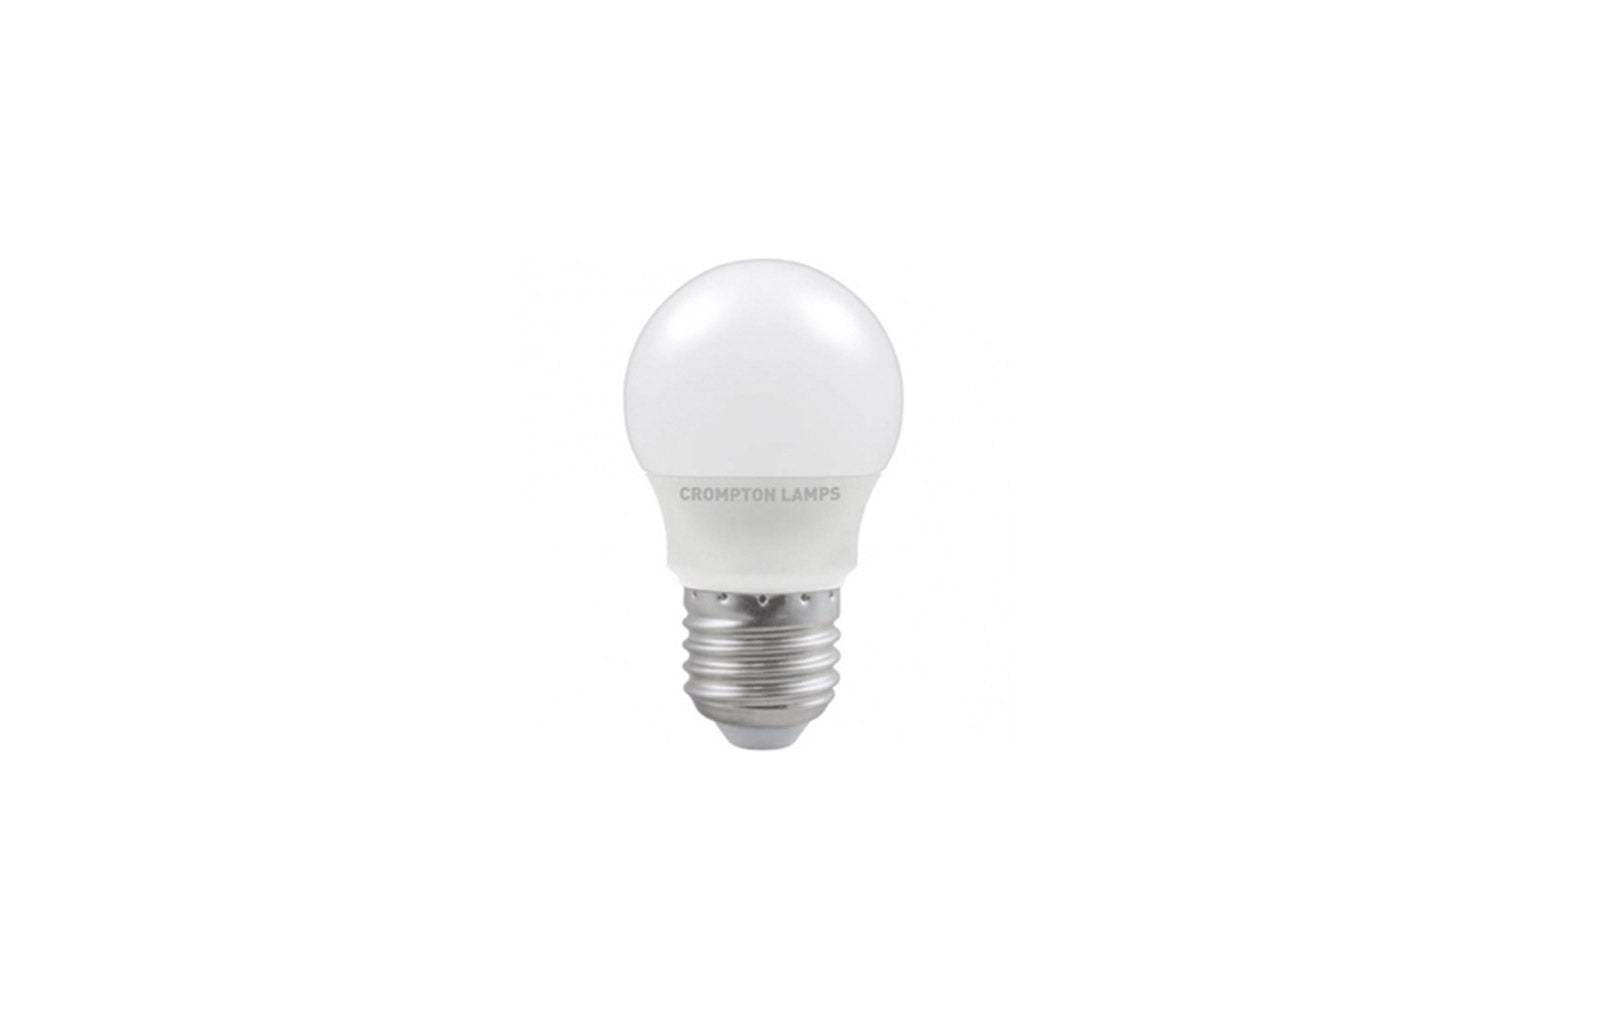 Crompton 7277 LED Dimmable Light Bulb Golf Ball